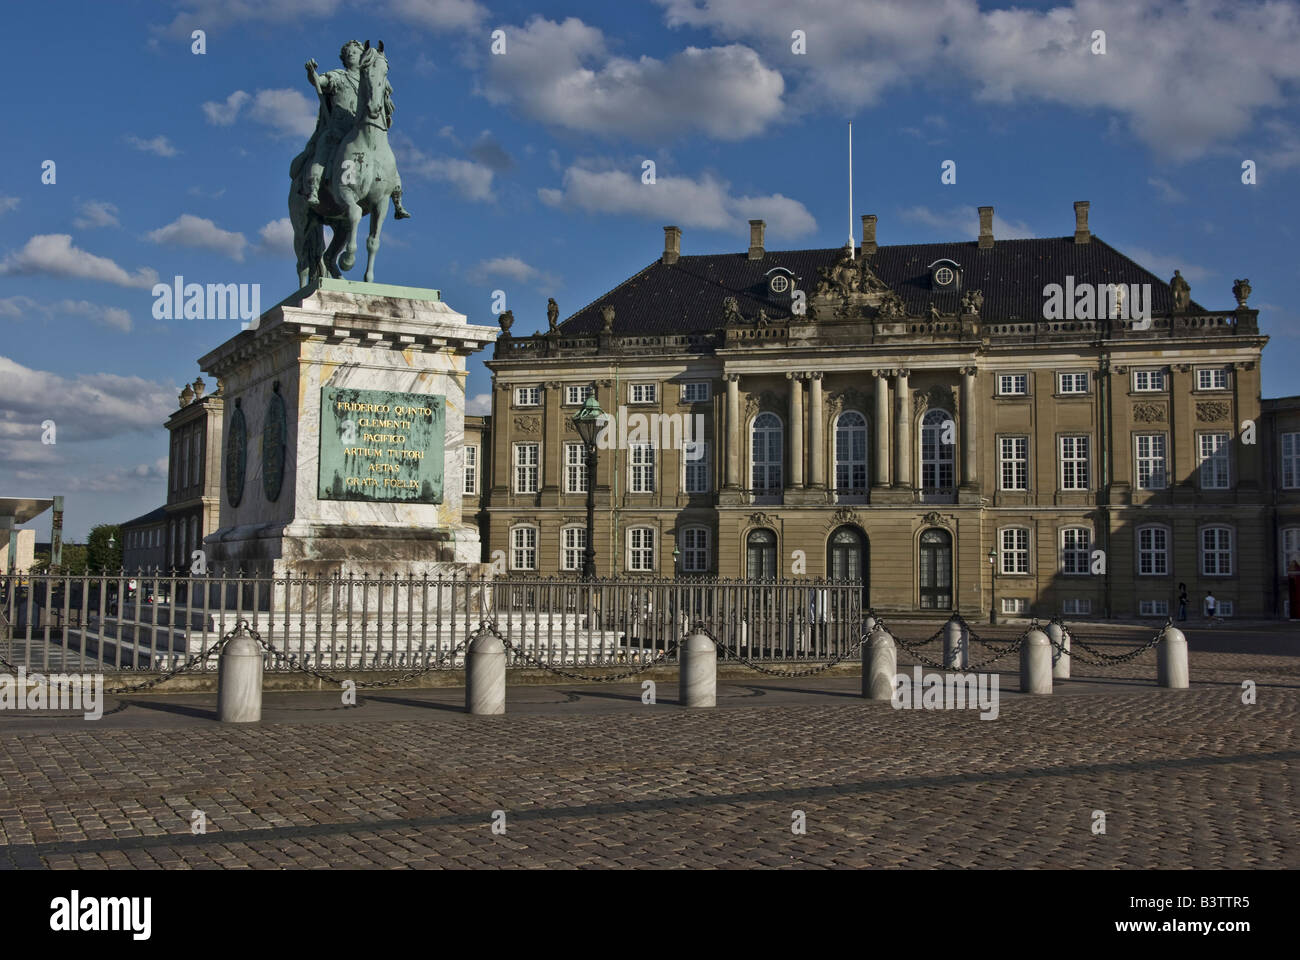 Europe, Denmark, Copenhagen, Amalienborg Palace Square, equestrian statue of King Frederick V and Palace of Christian IX Stock Photo